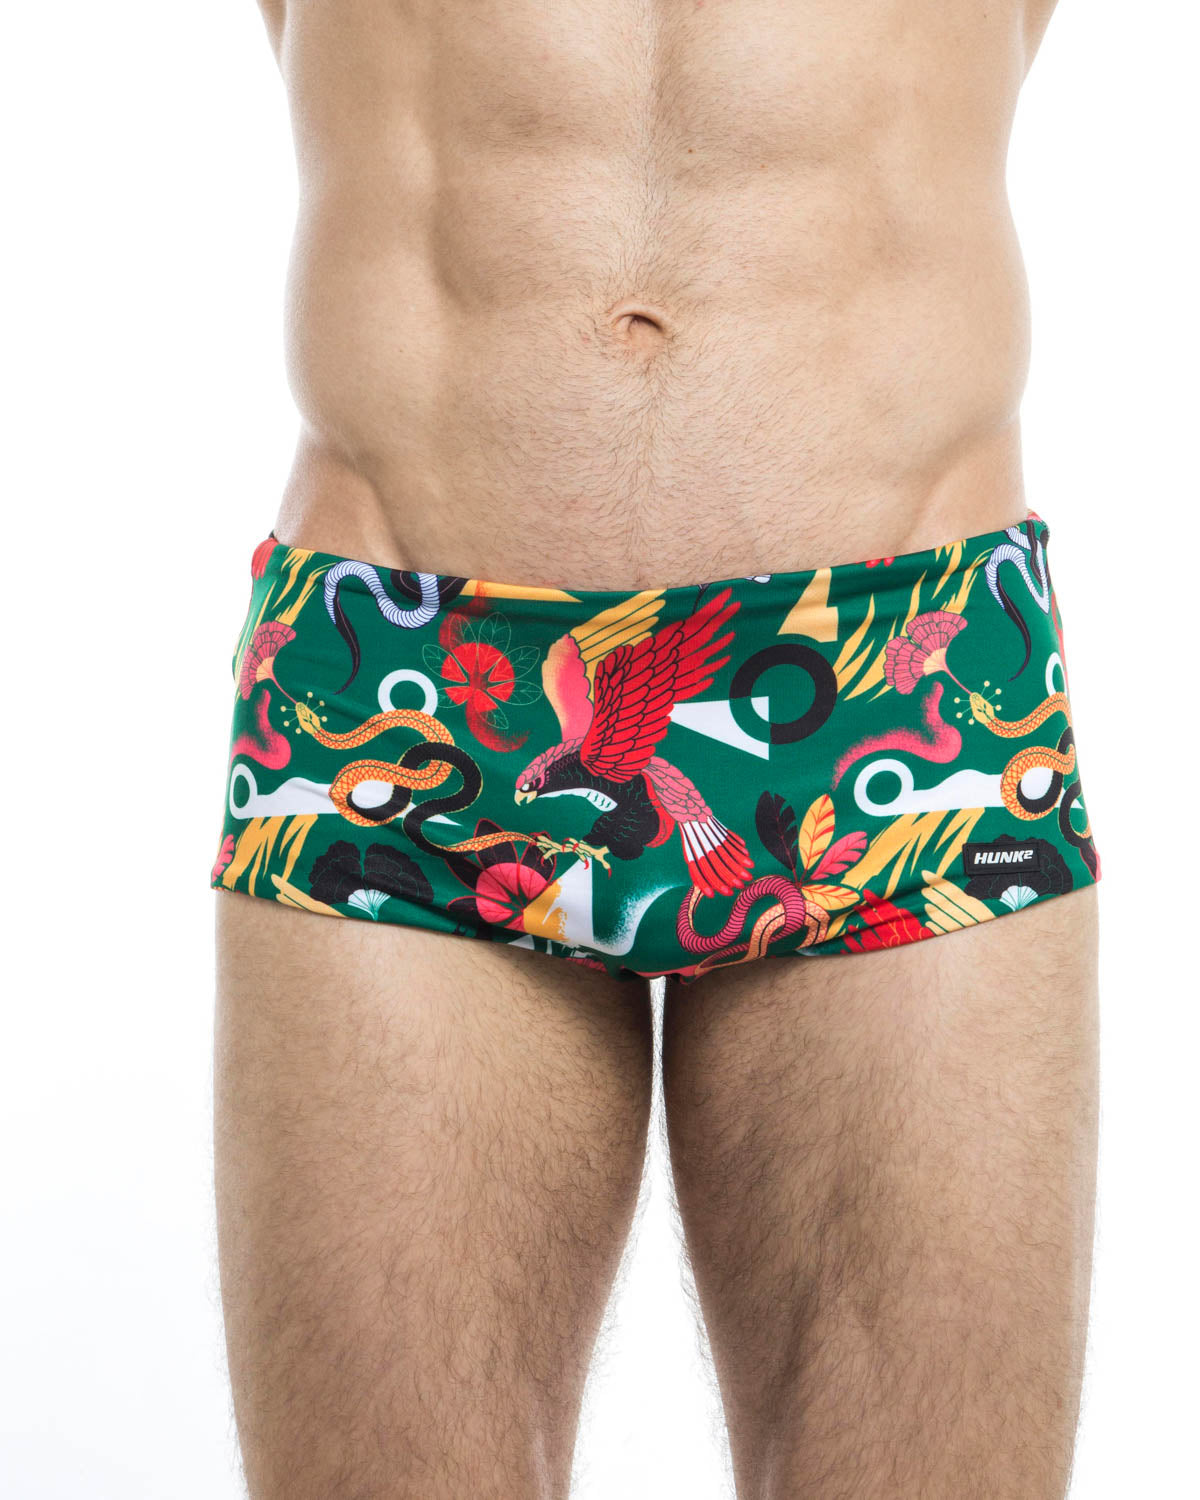 Men's swim trunks - HUNK2 Underwear Frosche Reversible Swim Trunks available at MensUnderwear.io - Image 1